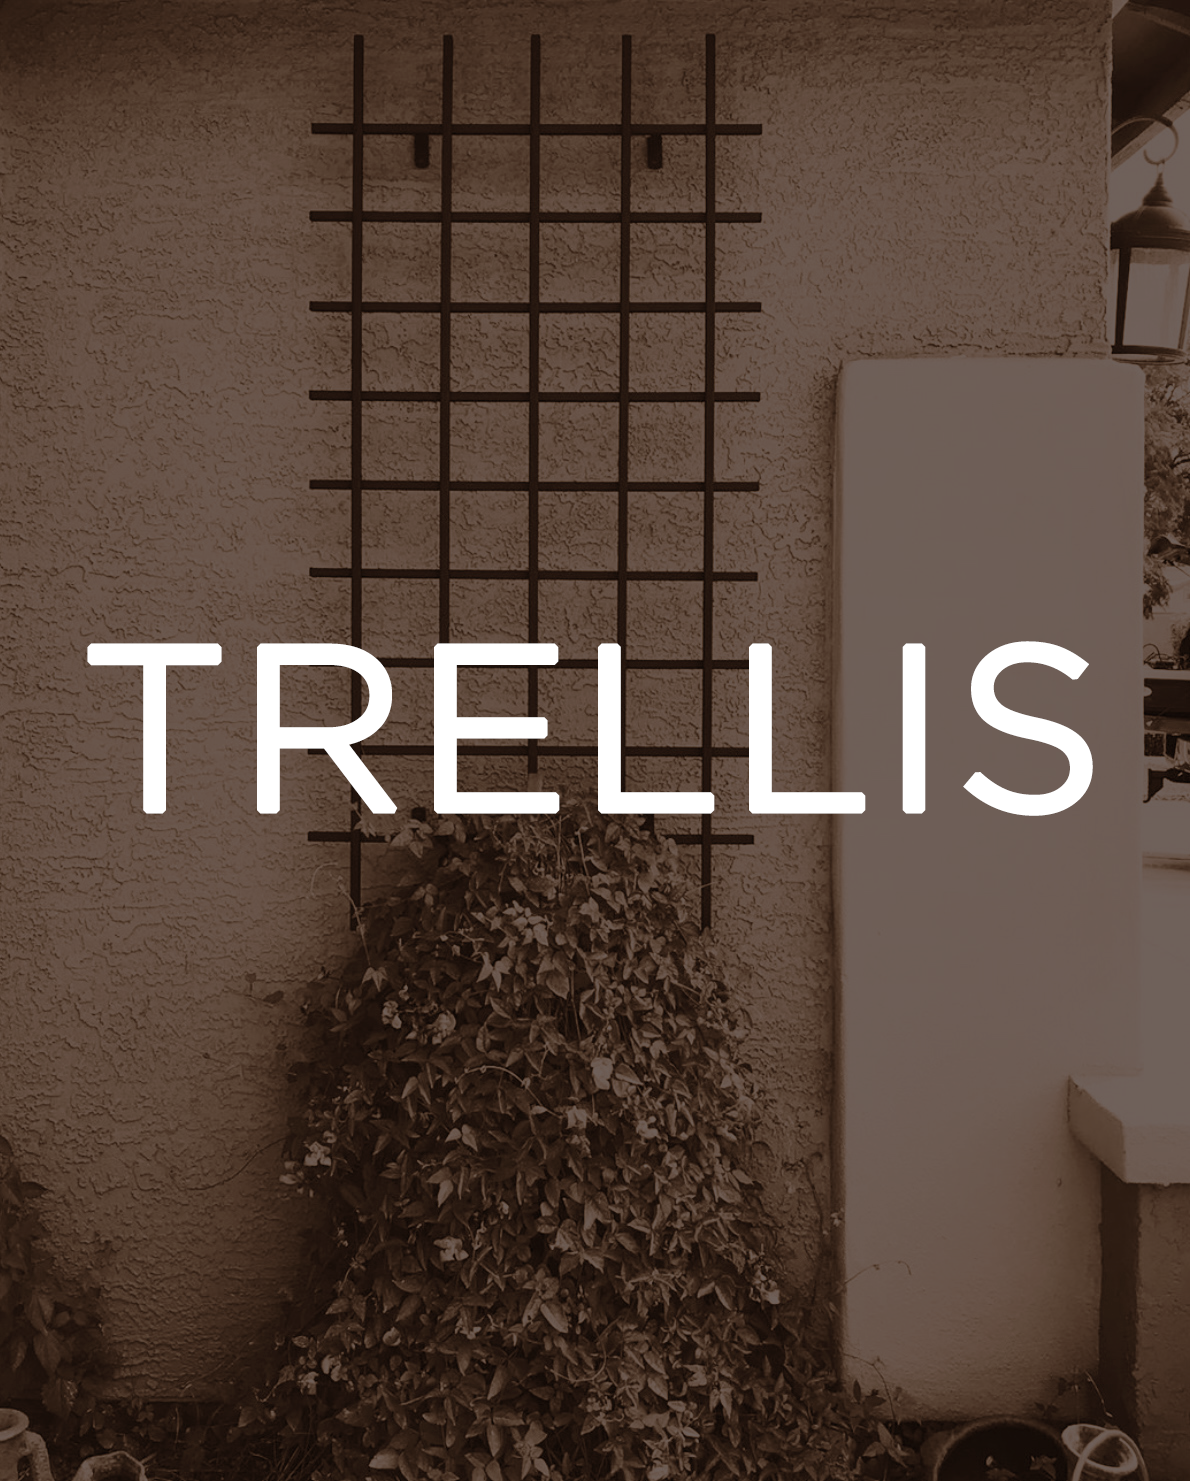 Steel Trellis - Wild West Ironworx Arizona